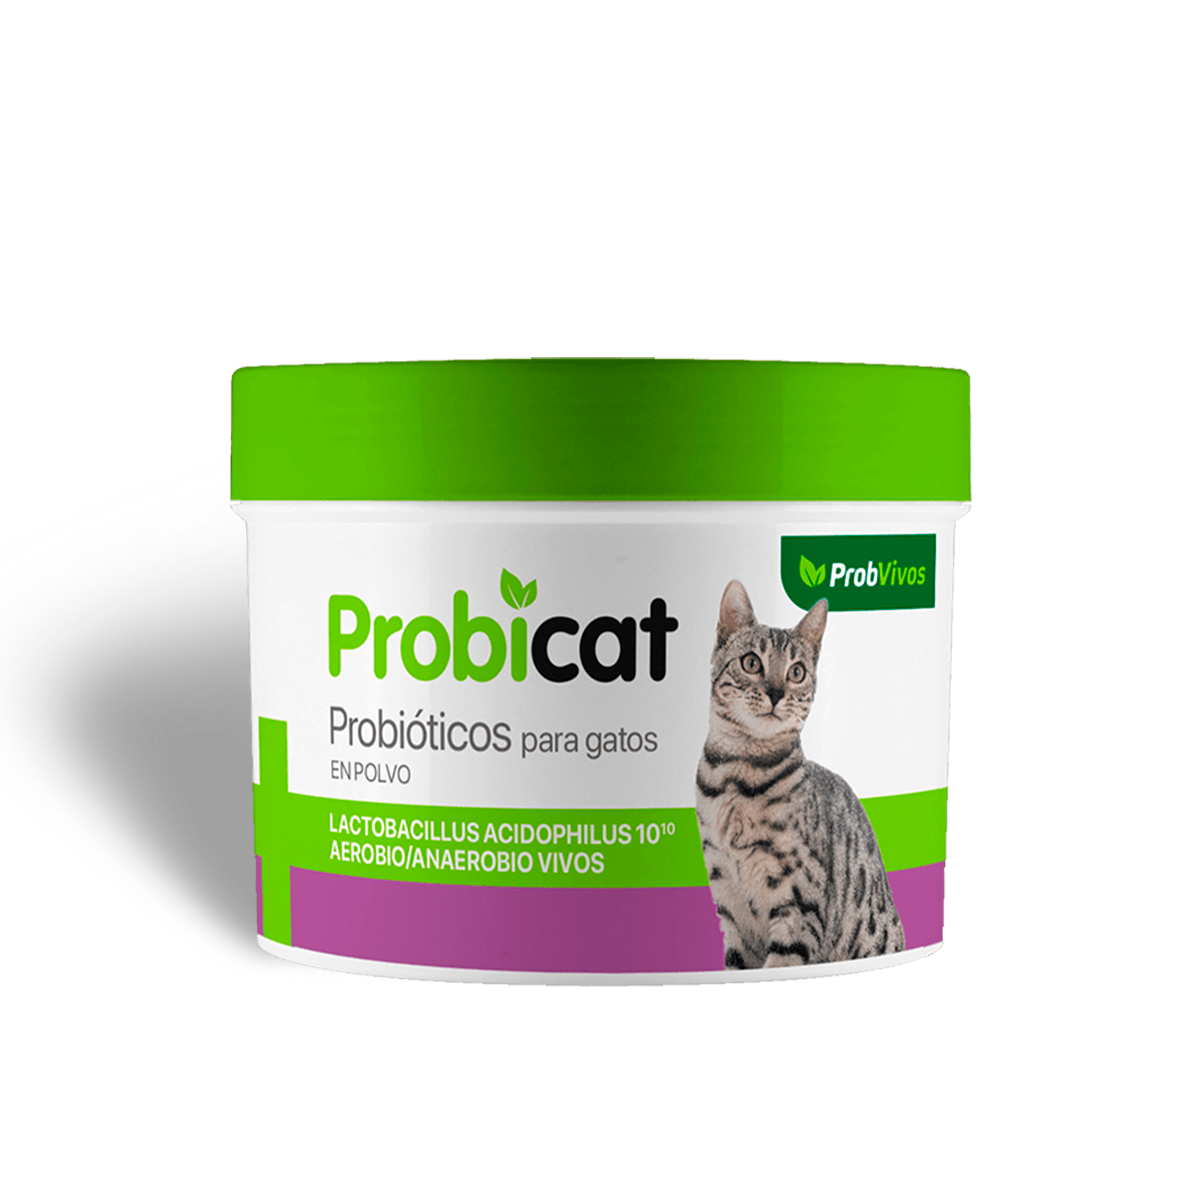 Probvivos Probicat Probióticos para Gatos